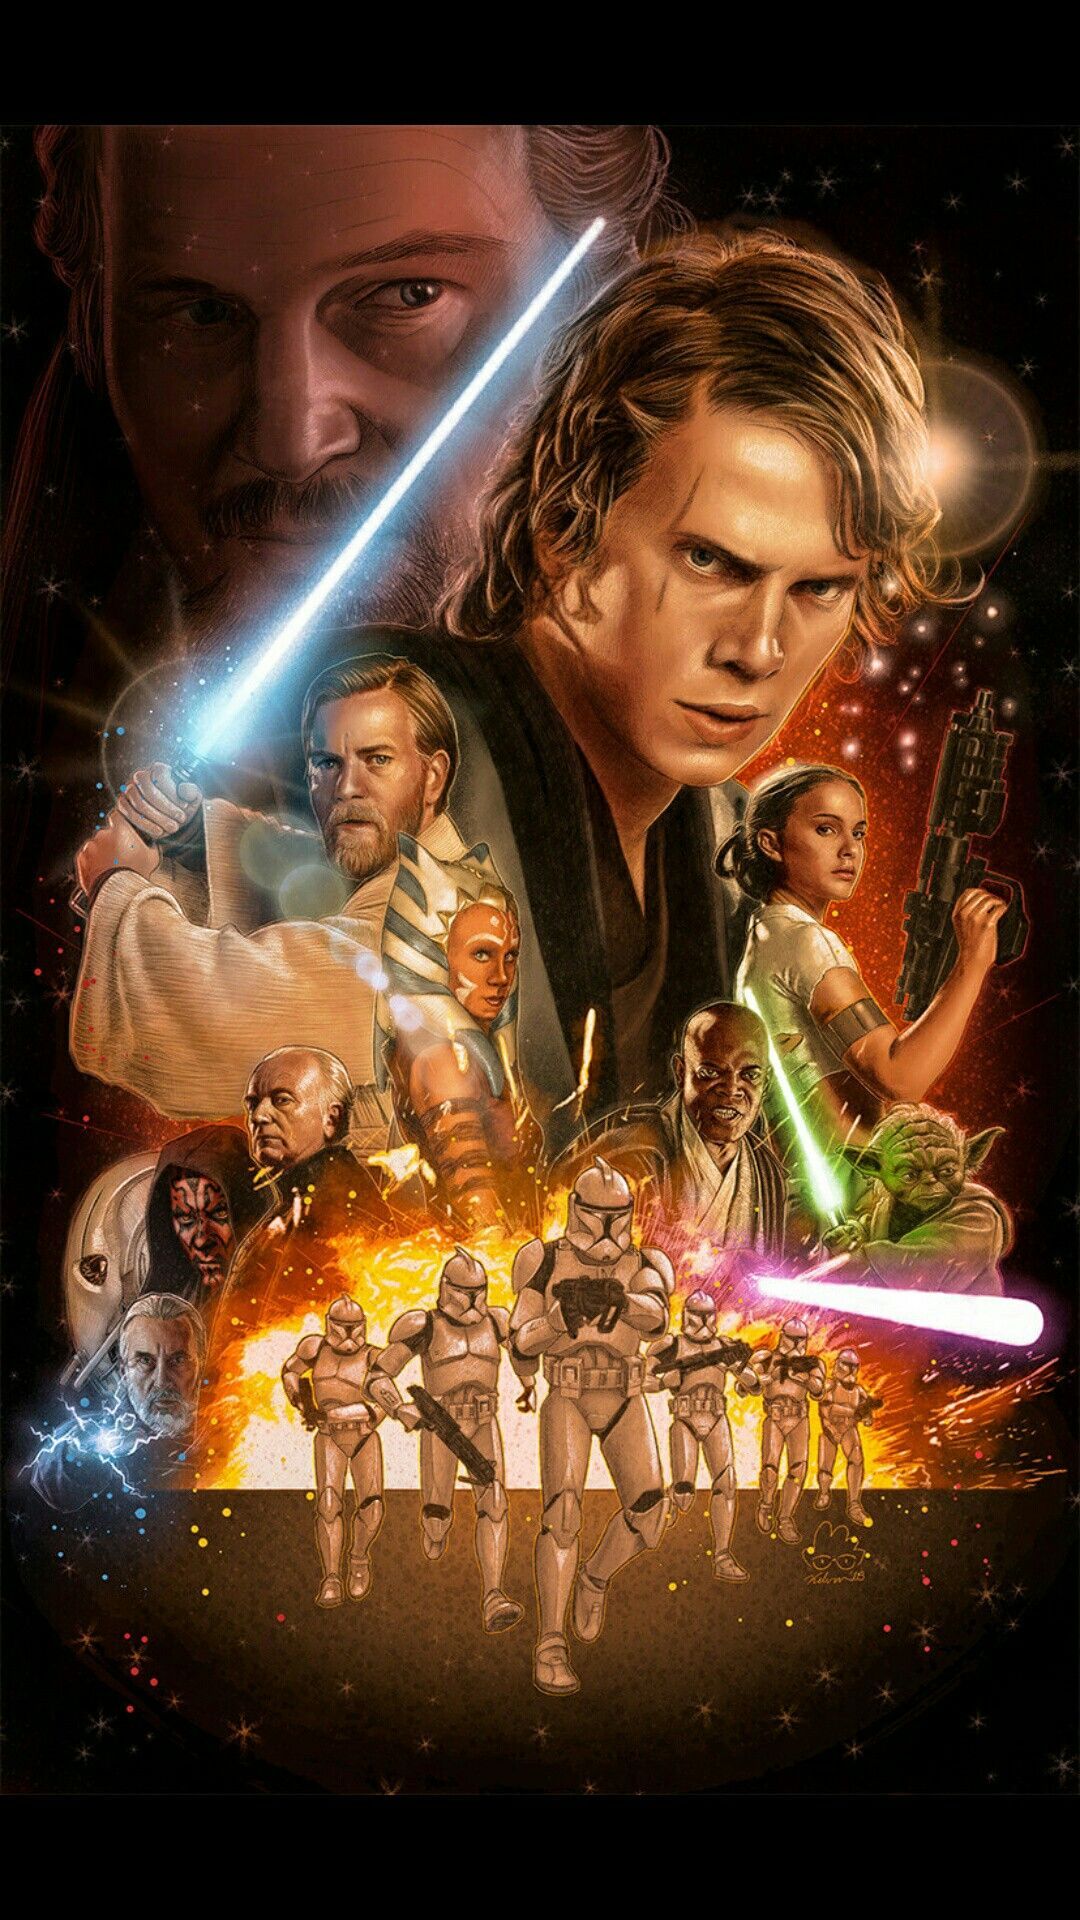 Star Wars Prequels. Star wars image, Star wars painting, Star wars trilogy